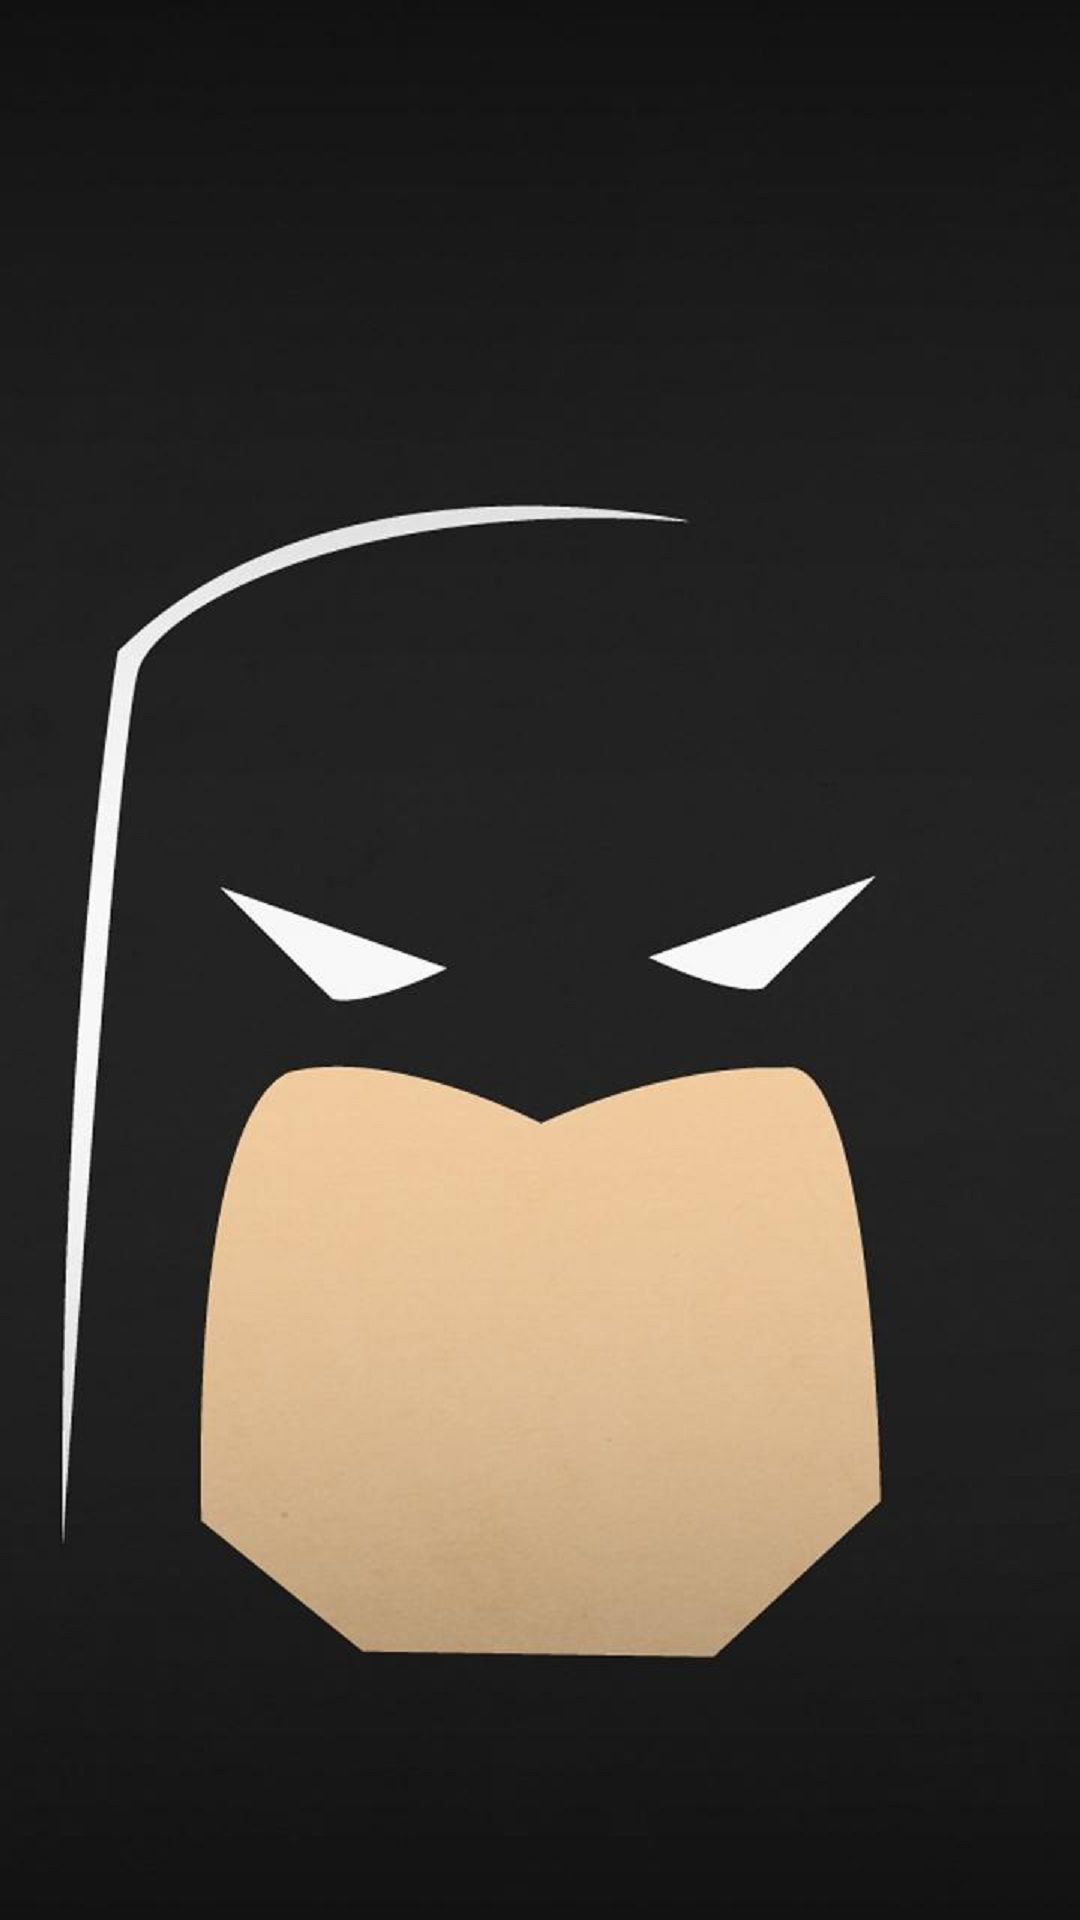 Minimalist Superhero Batman Androidwallpaper